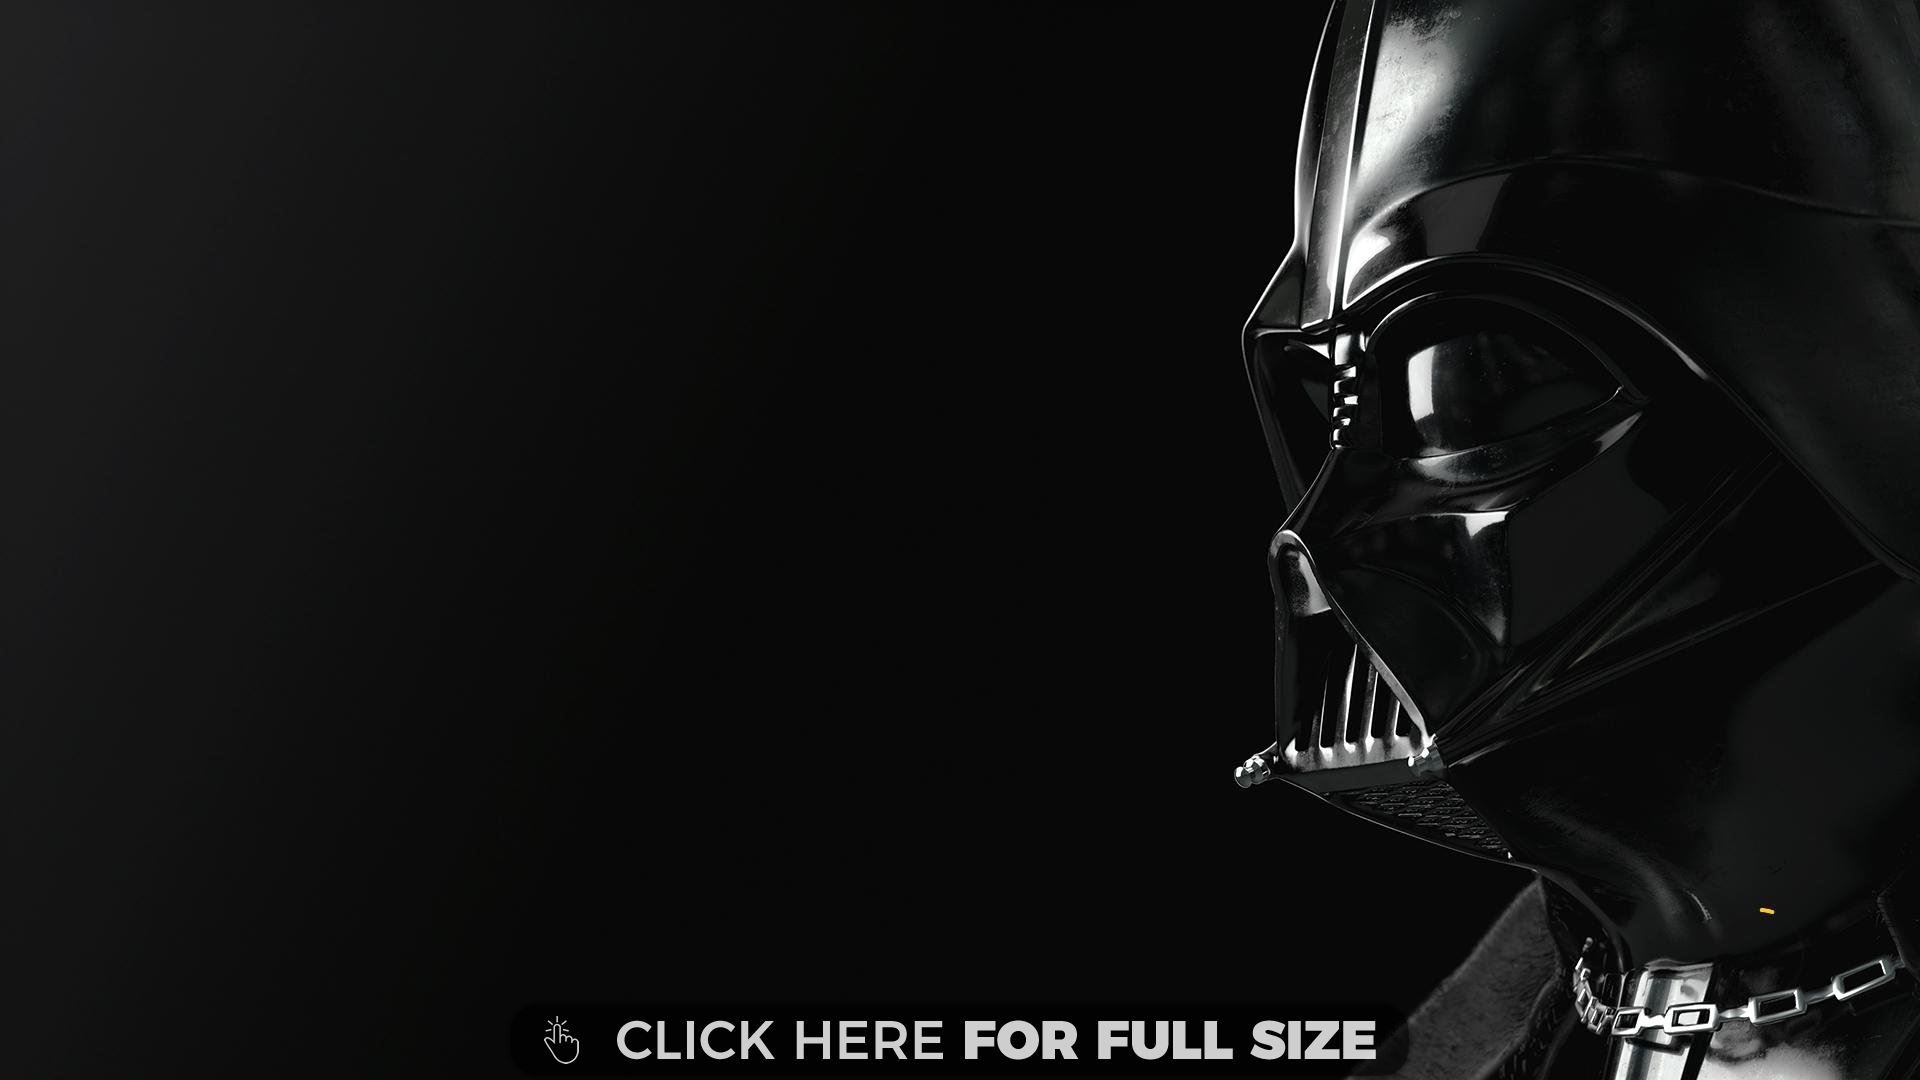 Darth Vader. Screenshotted During the BF Beta. Star wars wallpaper, Darth vader wallpaper, Star wars battlefront